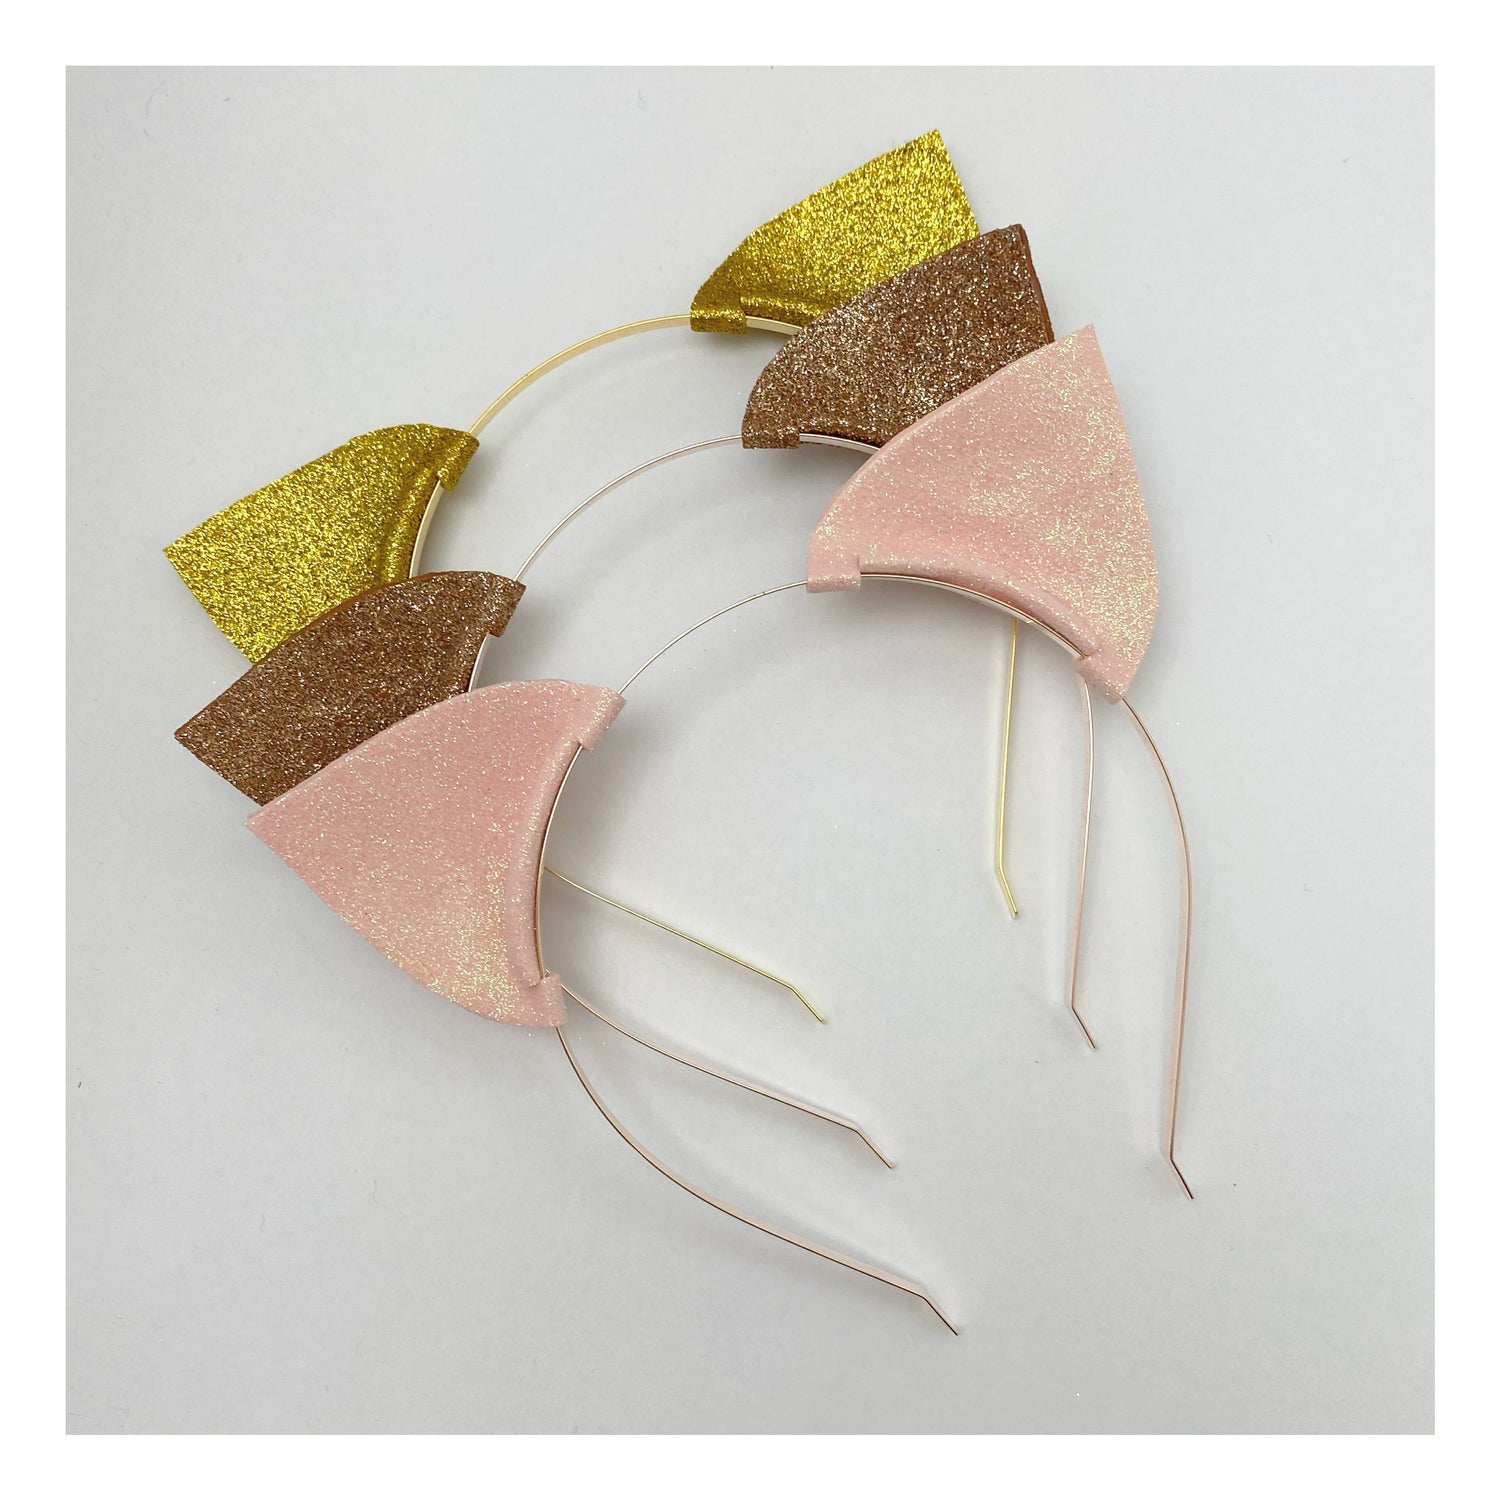 Glitter Cat Ear Headbands. Shown: light pink, stardust and gold. Slim metal headbands for easy wear.